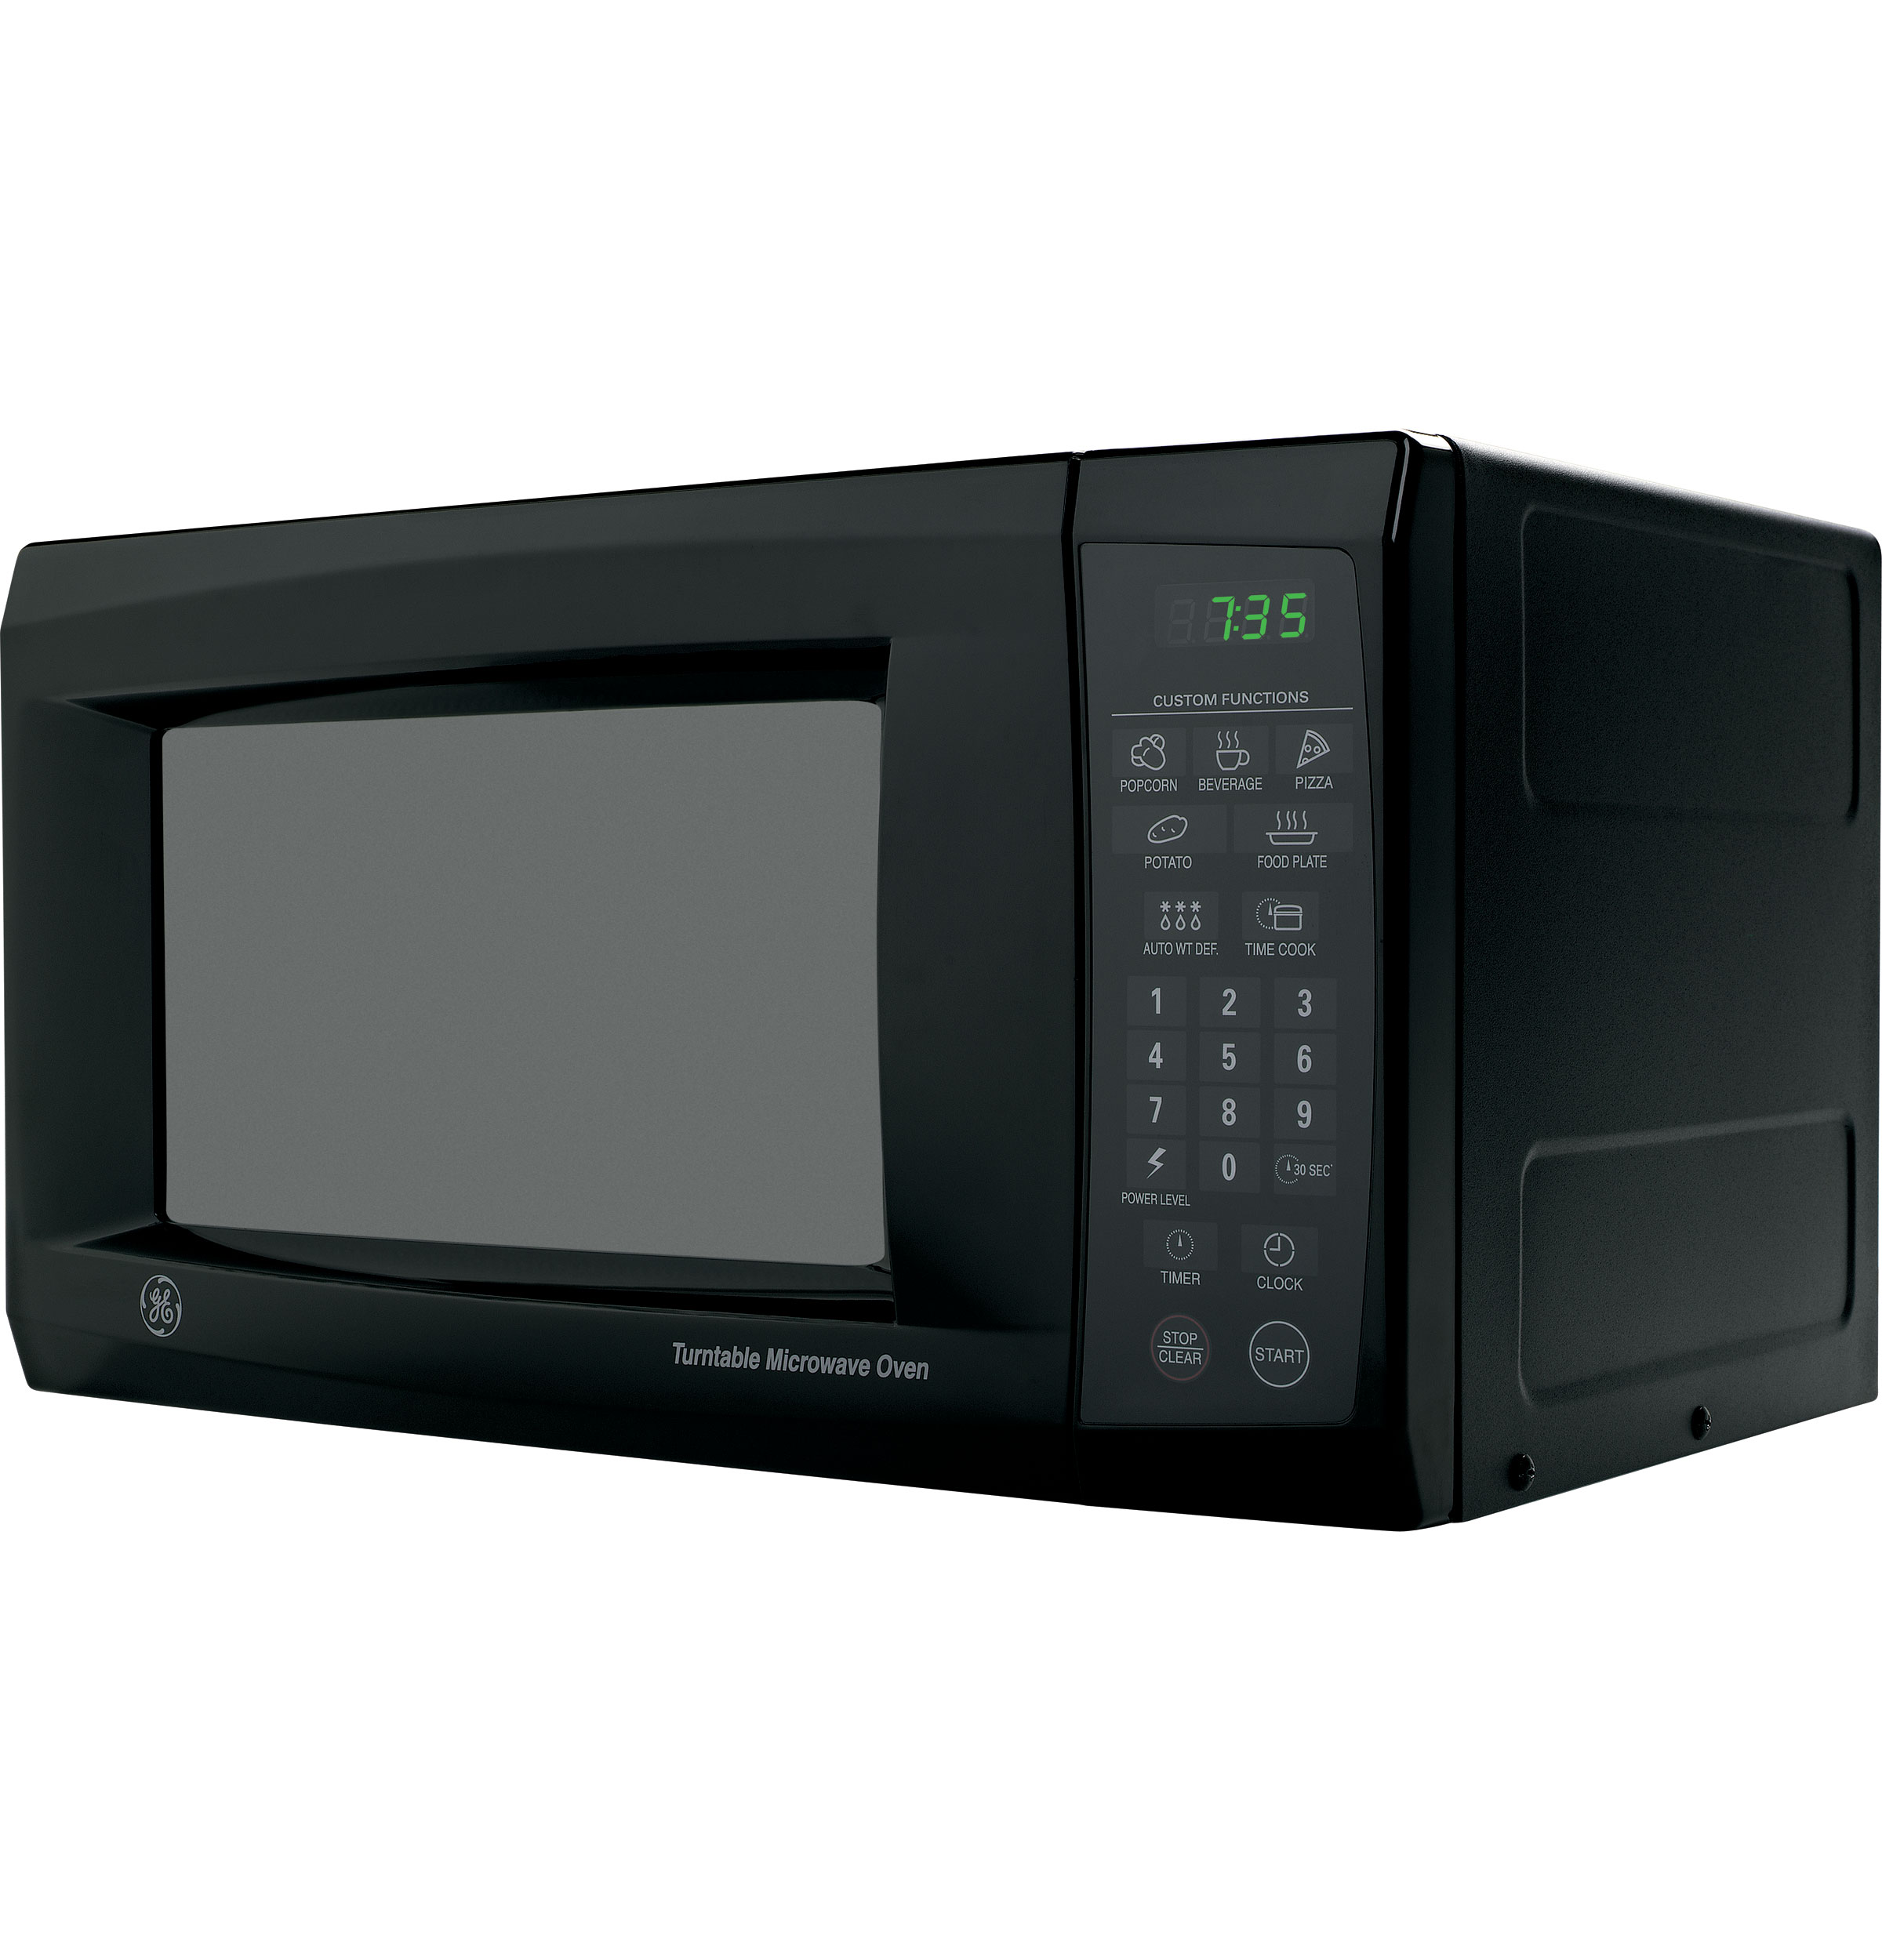 GE® .7 Cu. Ft. Capacity Countertop Microwave Oven